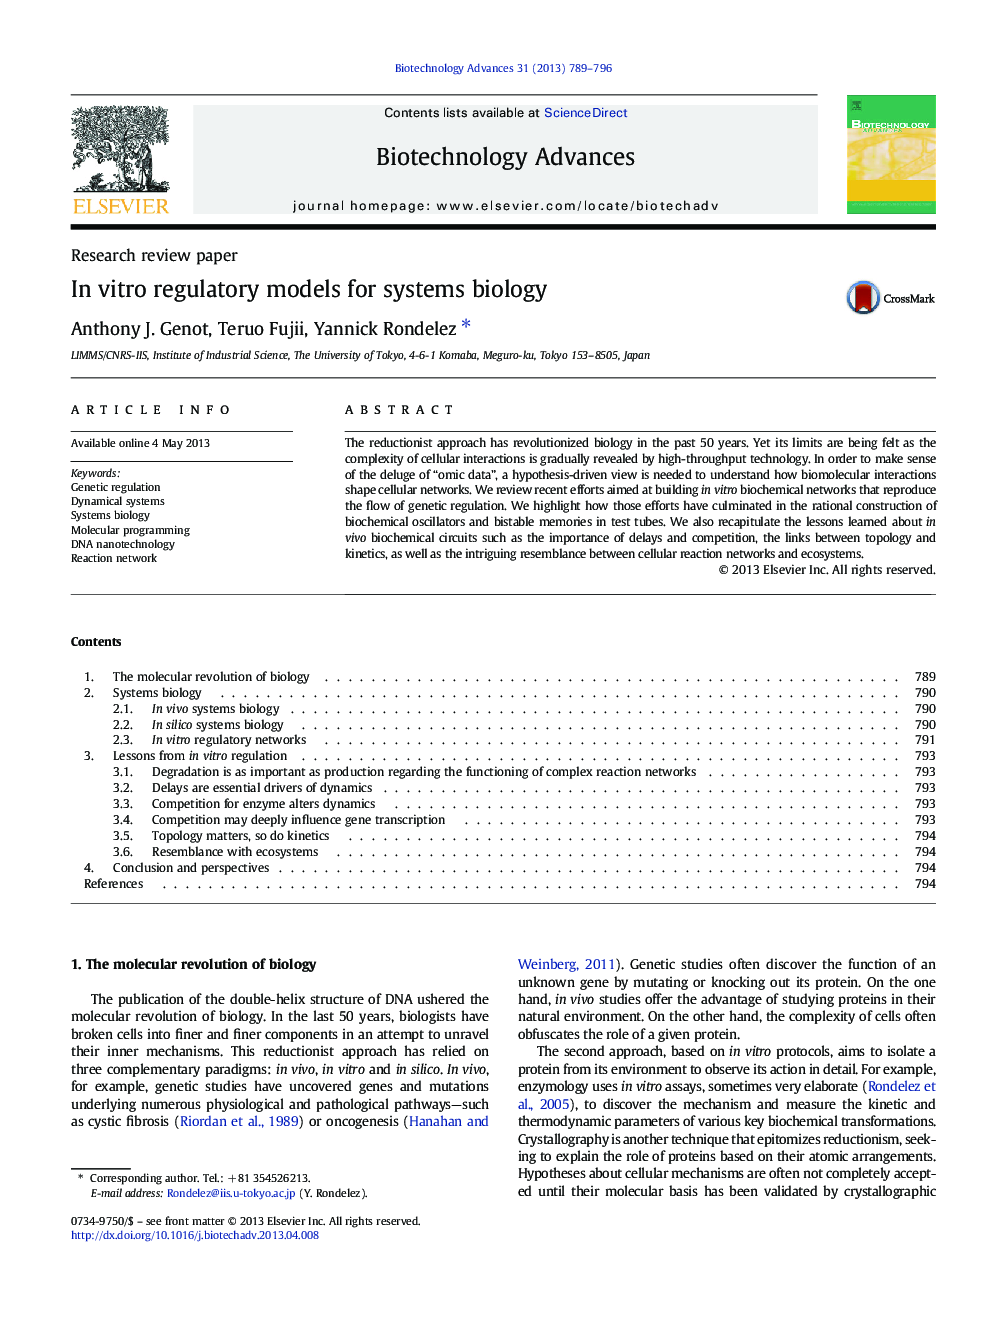 In vitro regulatory models for systems biology